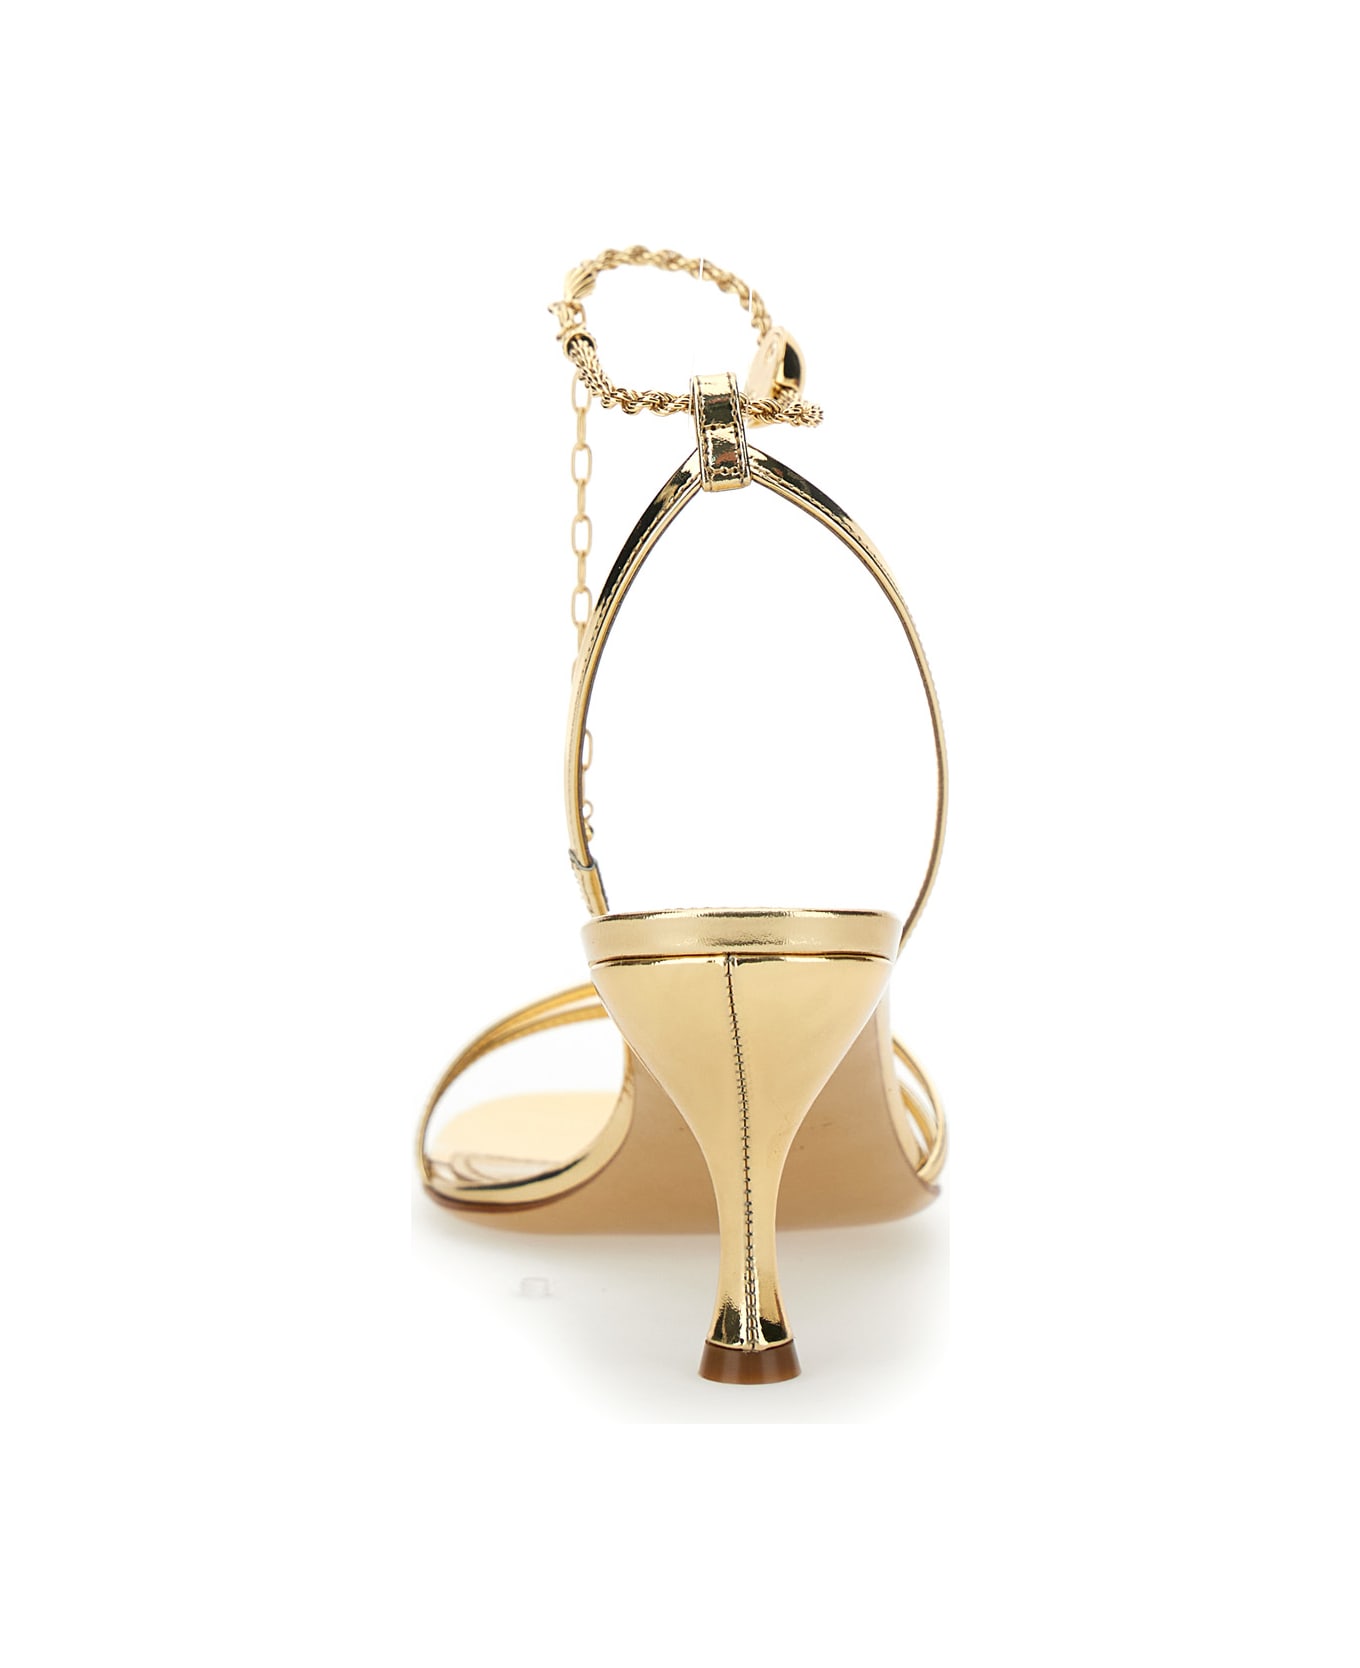 Ferragamo Gold Tone Sandals With Chain In Patent Leather Woman - Metallic サンダル